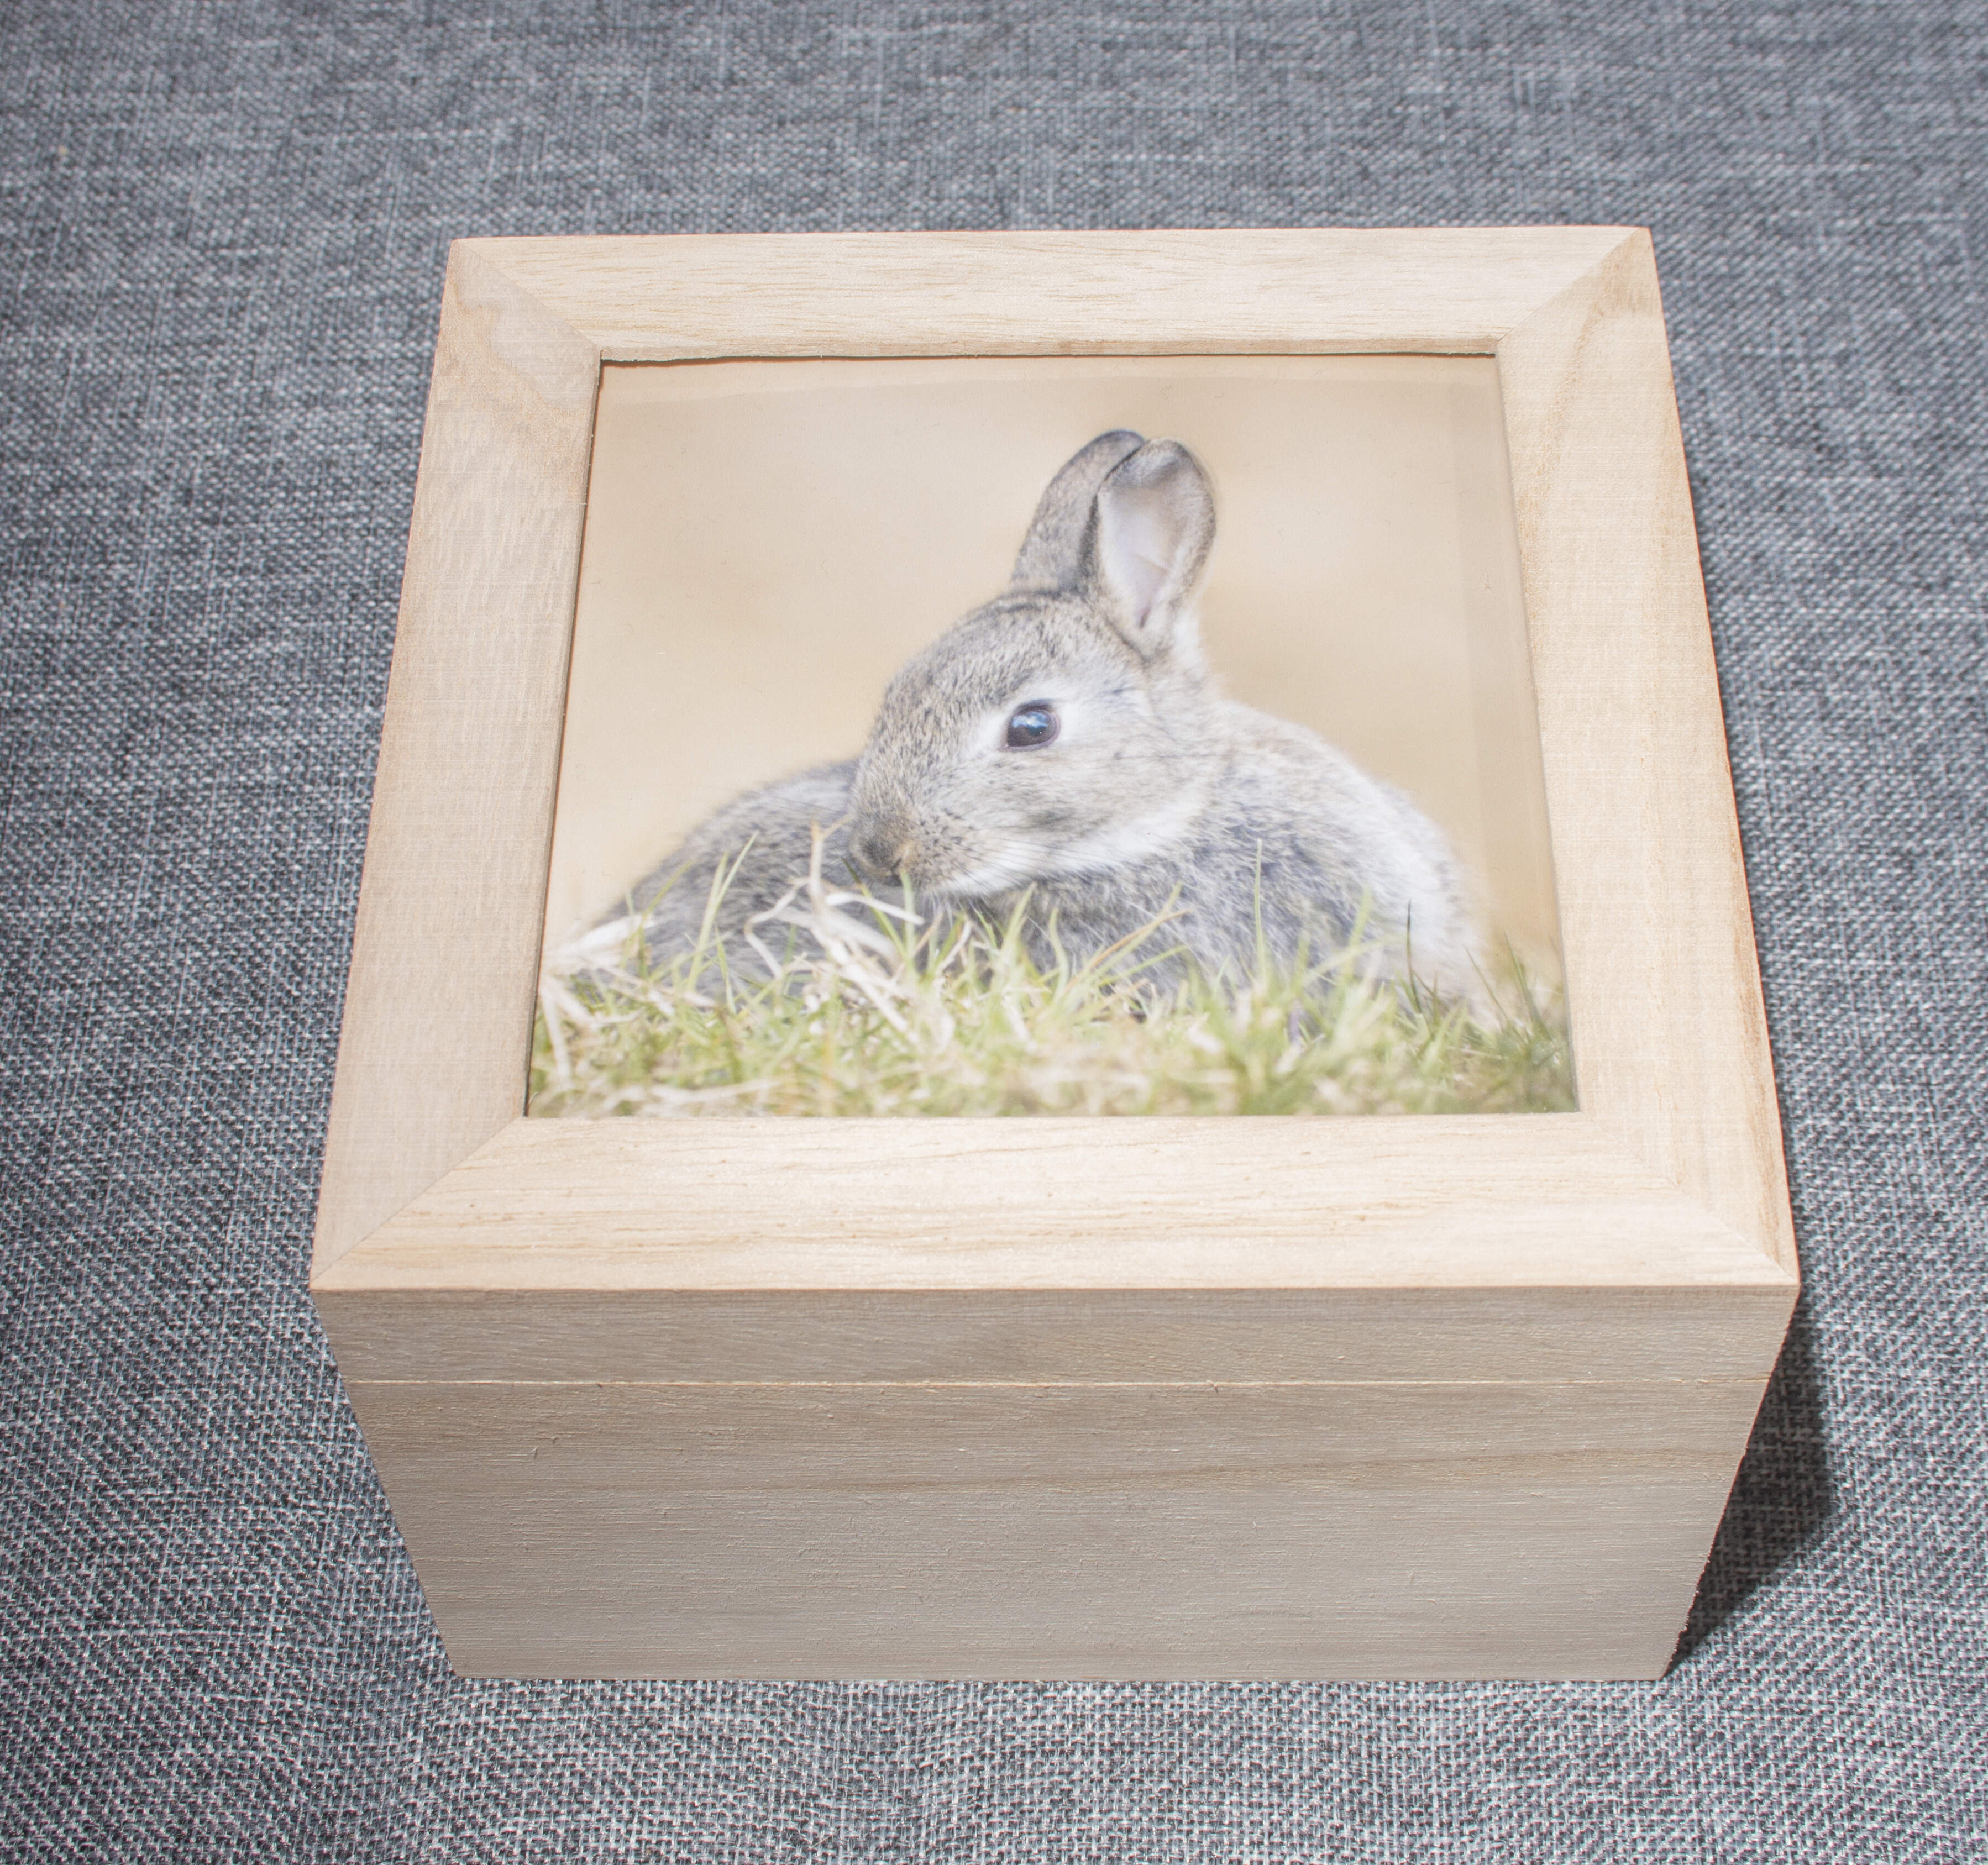 Rabbit photo jewellery box